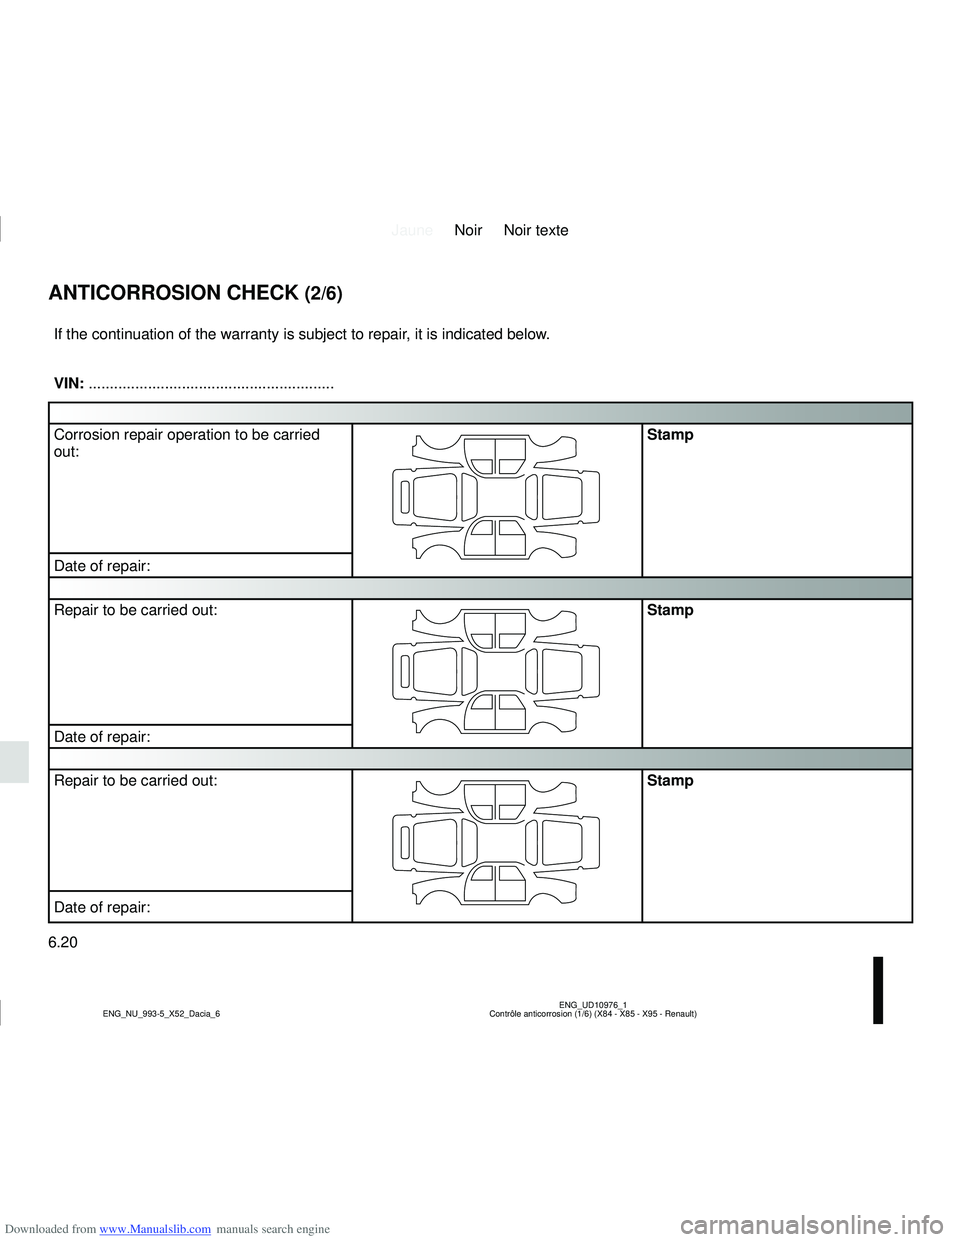 DACIA LOGAN 2021 Manual PDF Downloaded from www.Manualslib.com manuals search engine JauneNoir Noir texte
6.20
ENG_UD10976_1
Contrôle anticorrosion (1/6) (X84 - X85 - X95 - Renault)
ENG_NU_993-5_X52_Dacia_6
ANTICORROSION CHECK 